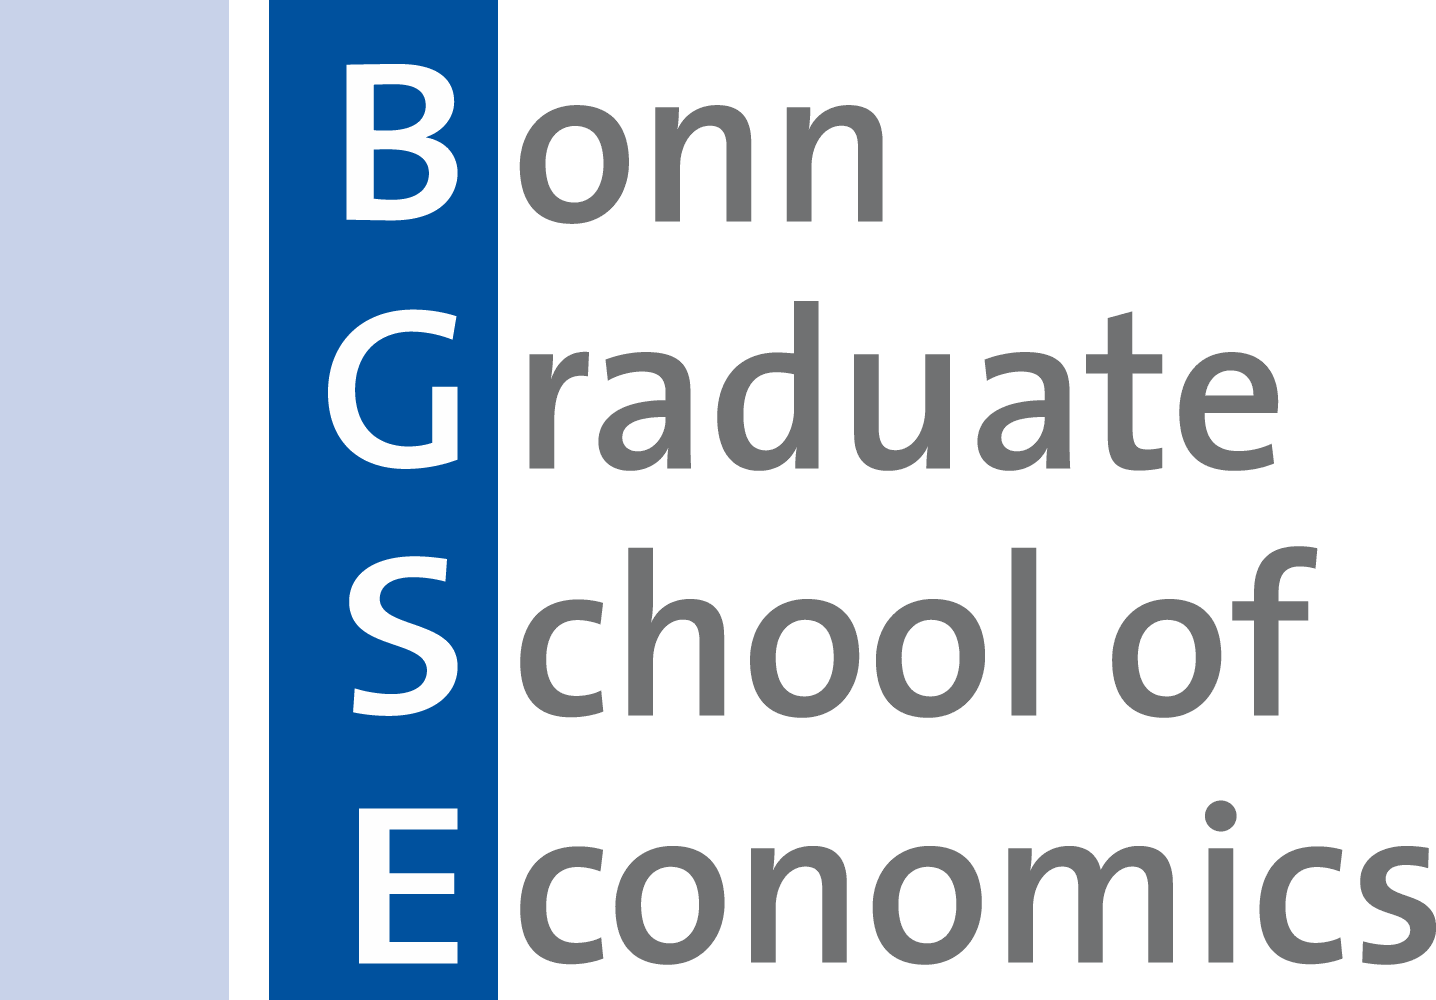 BGSE application period starts January 6, 2023